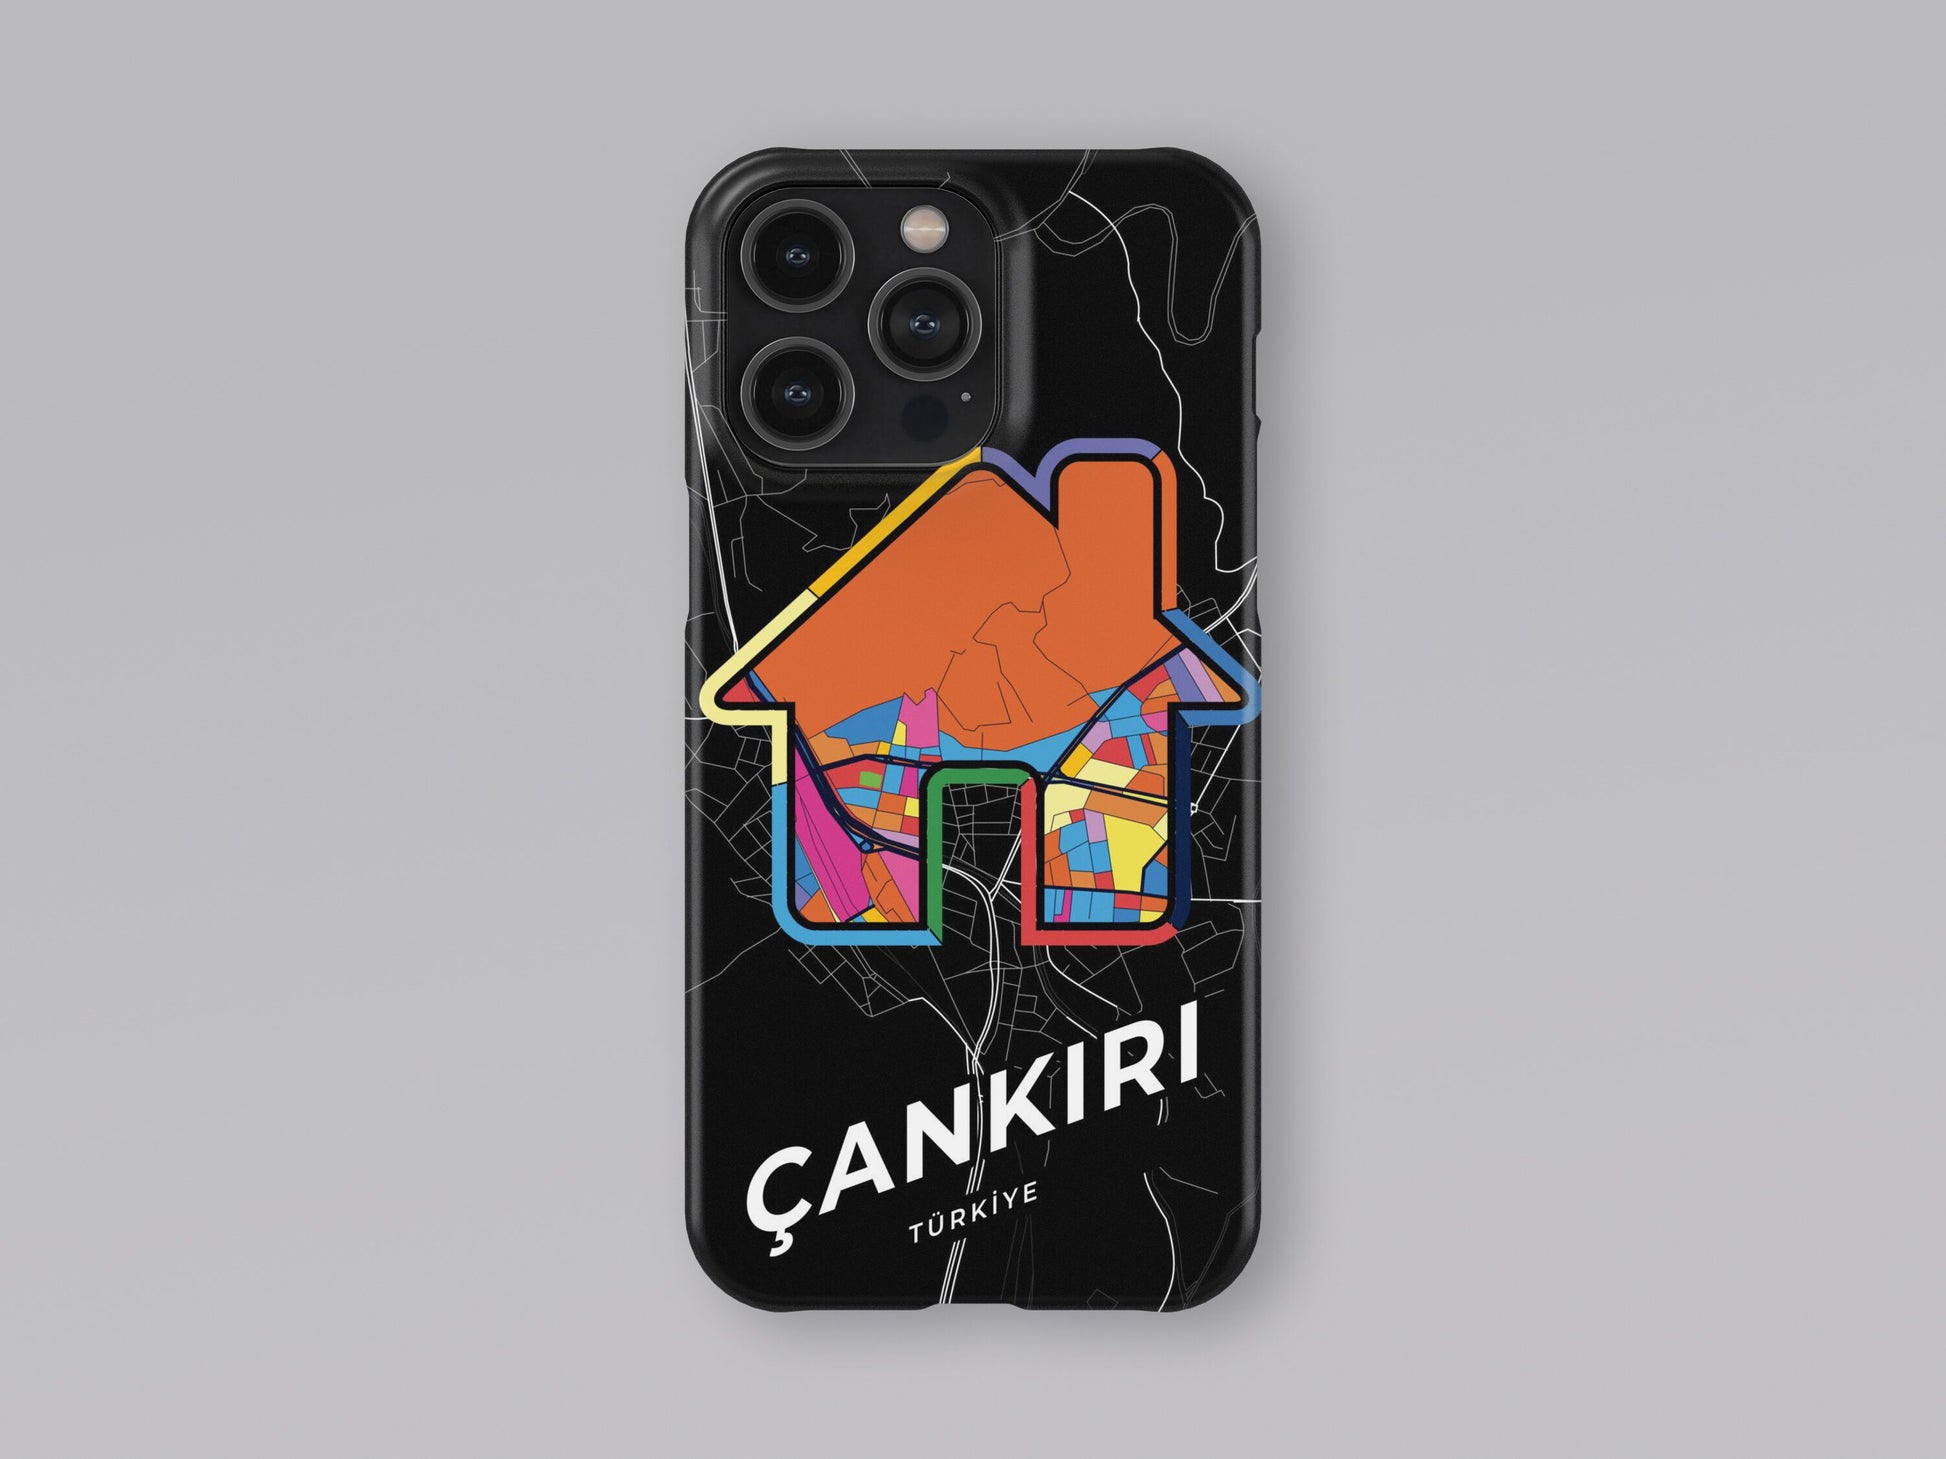 Çankırı Turkey slim phone case with colorful icon. Birthday, wedding or housewarming gift. Couple match cases. 3